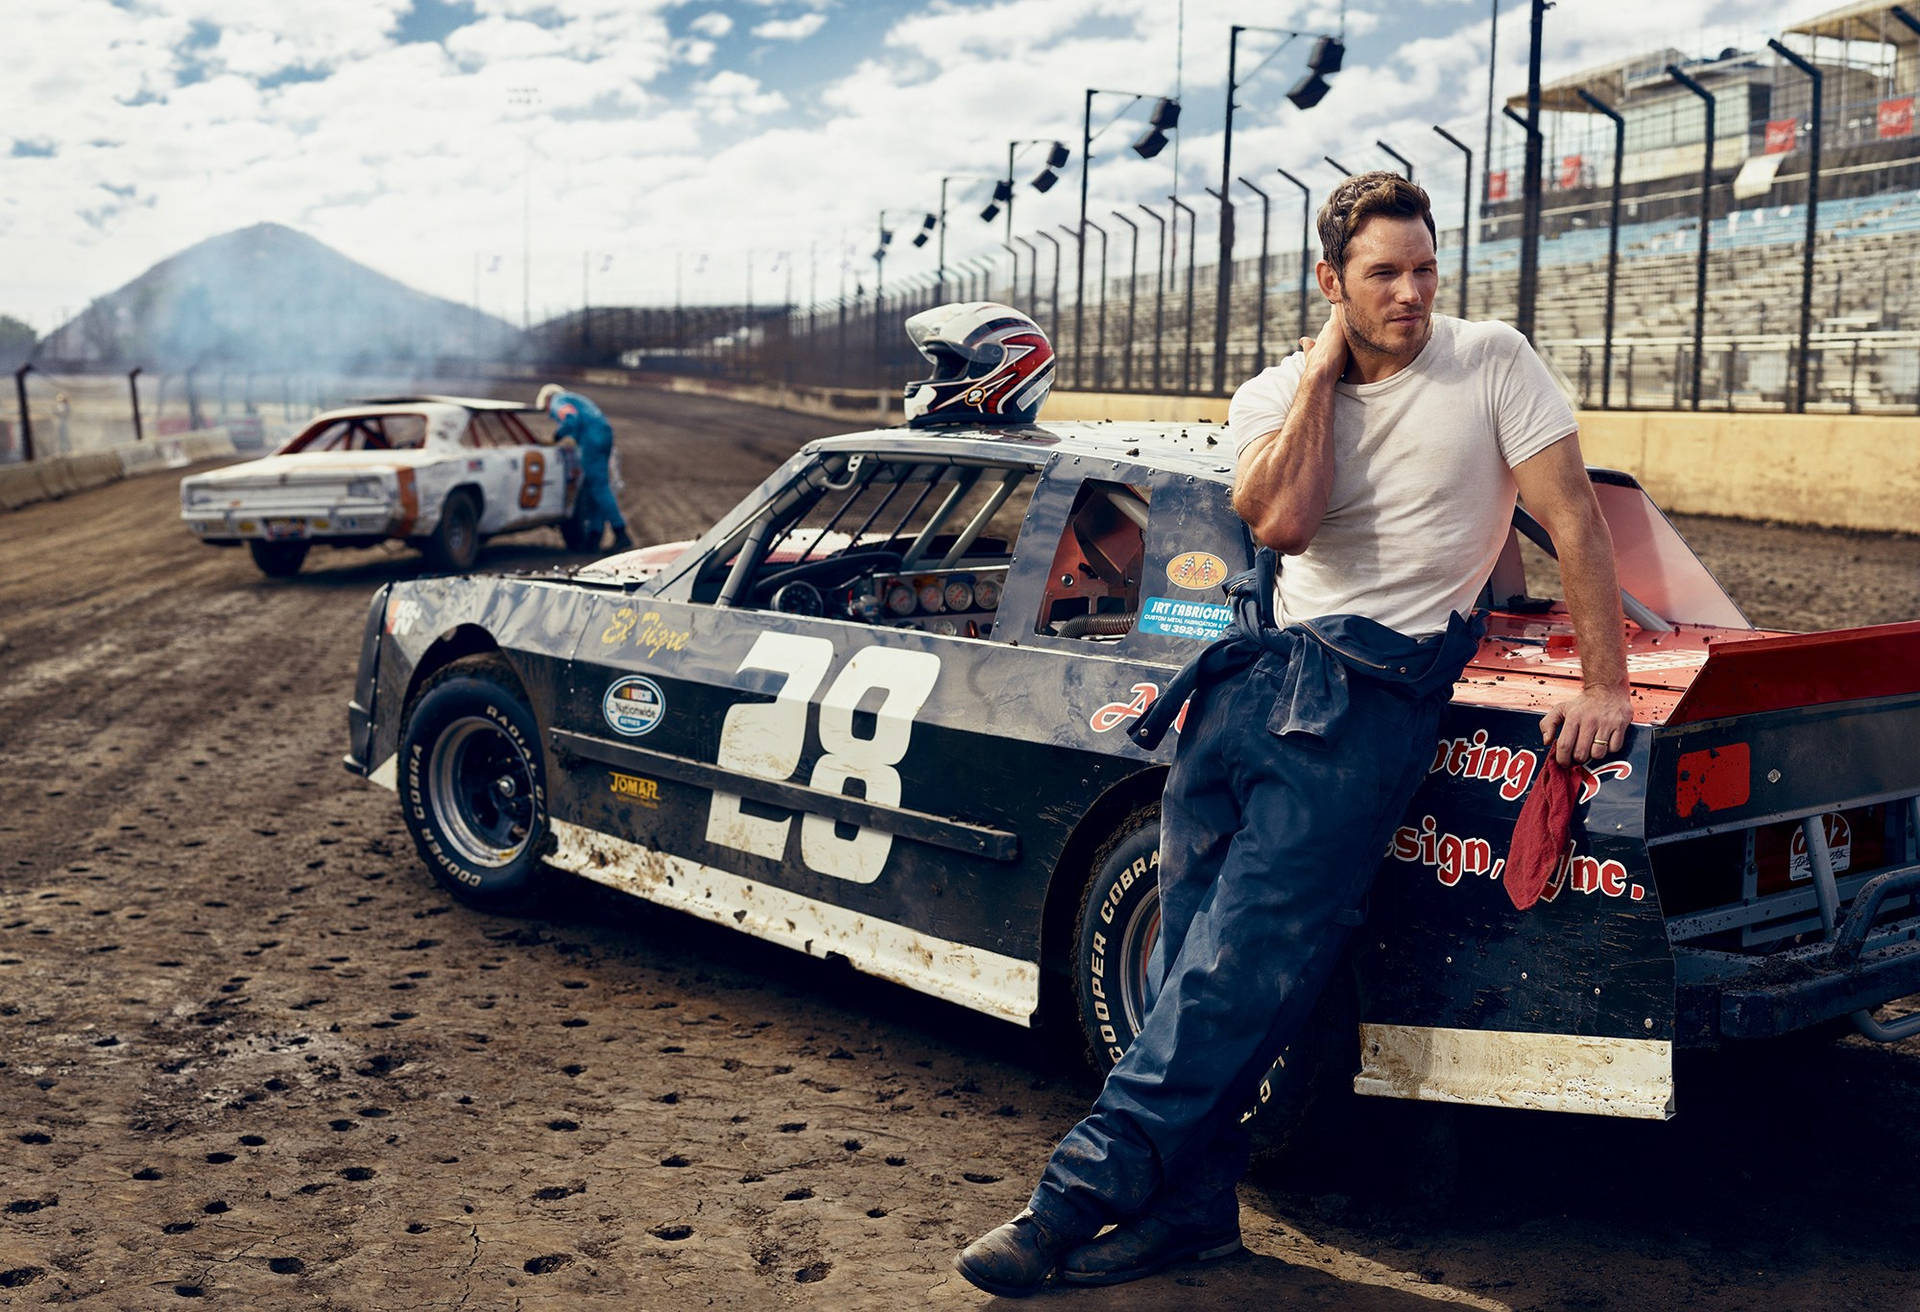 Chris Pratt Race Car Vanity Fair Picture